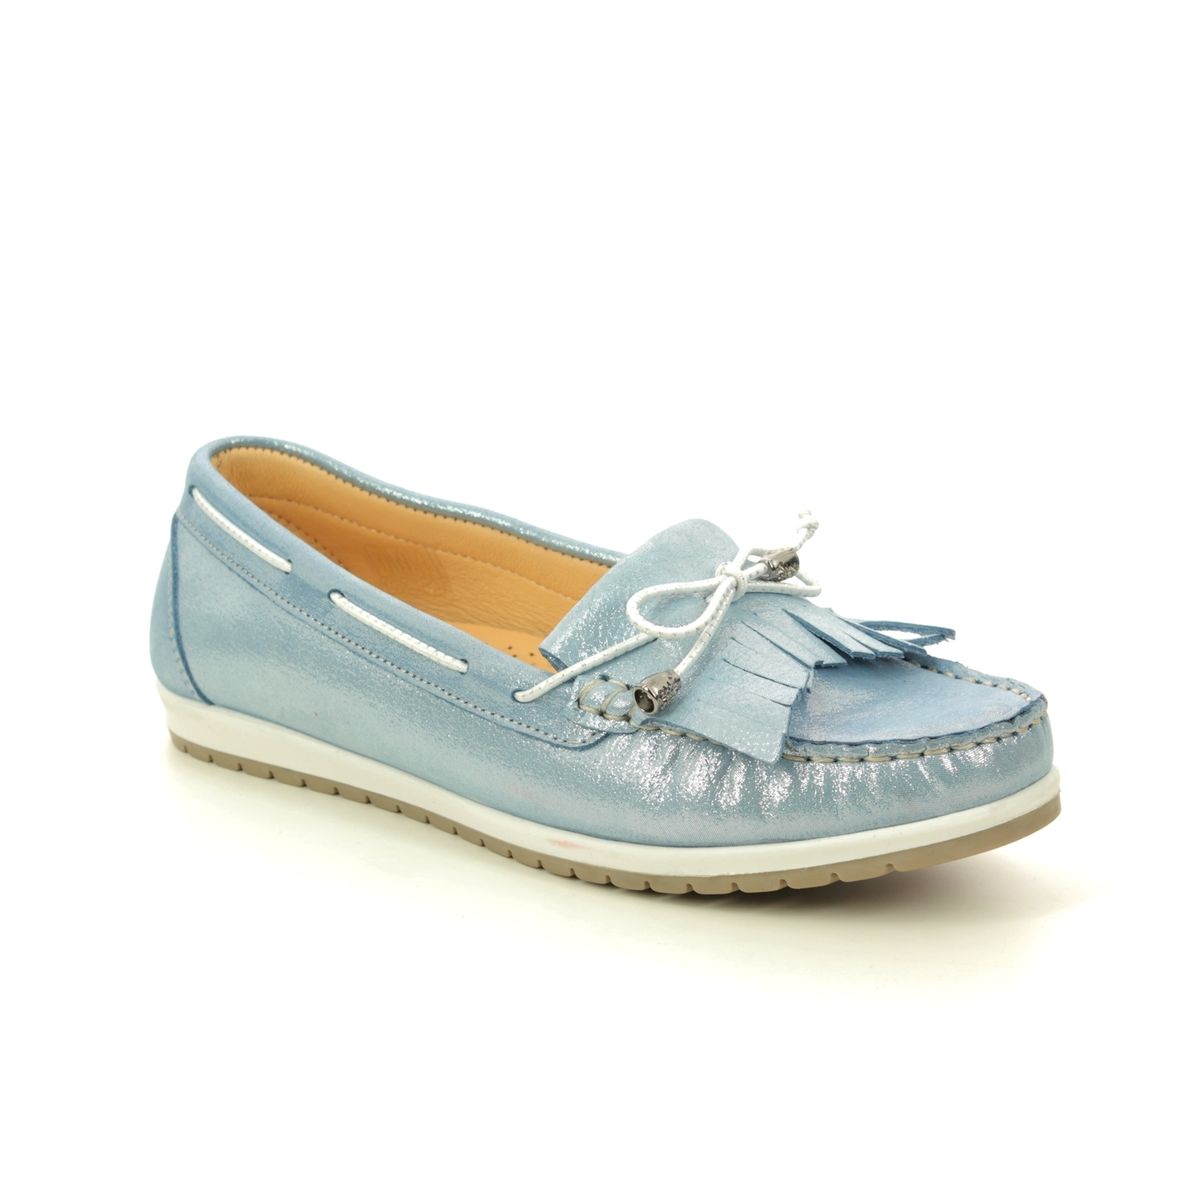 Roselli Arlene 2020-19 BLUE LEATHER loafers